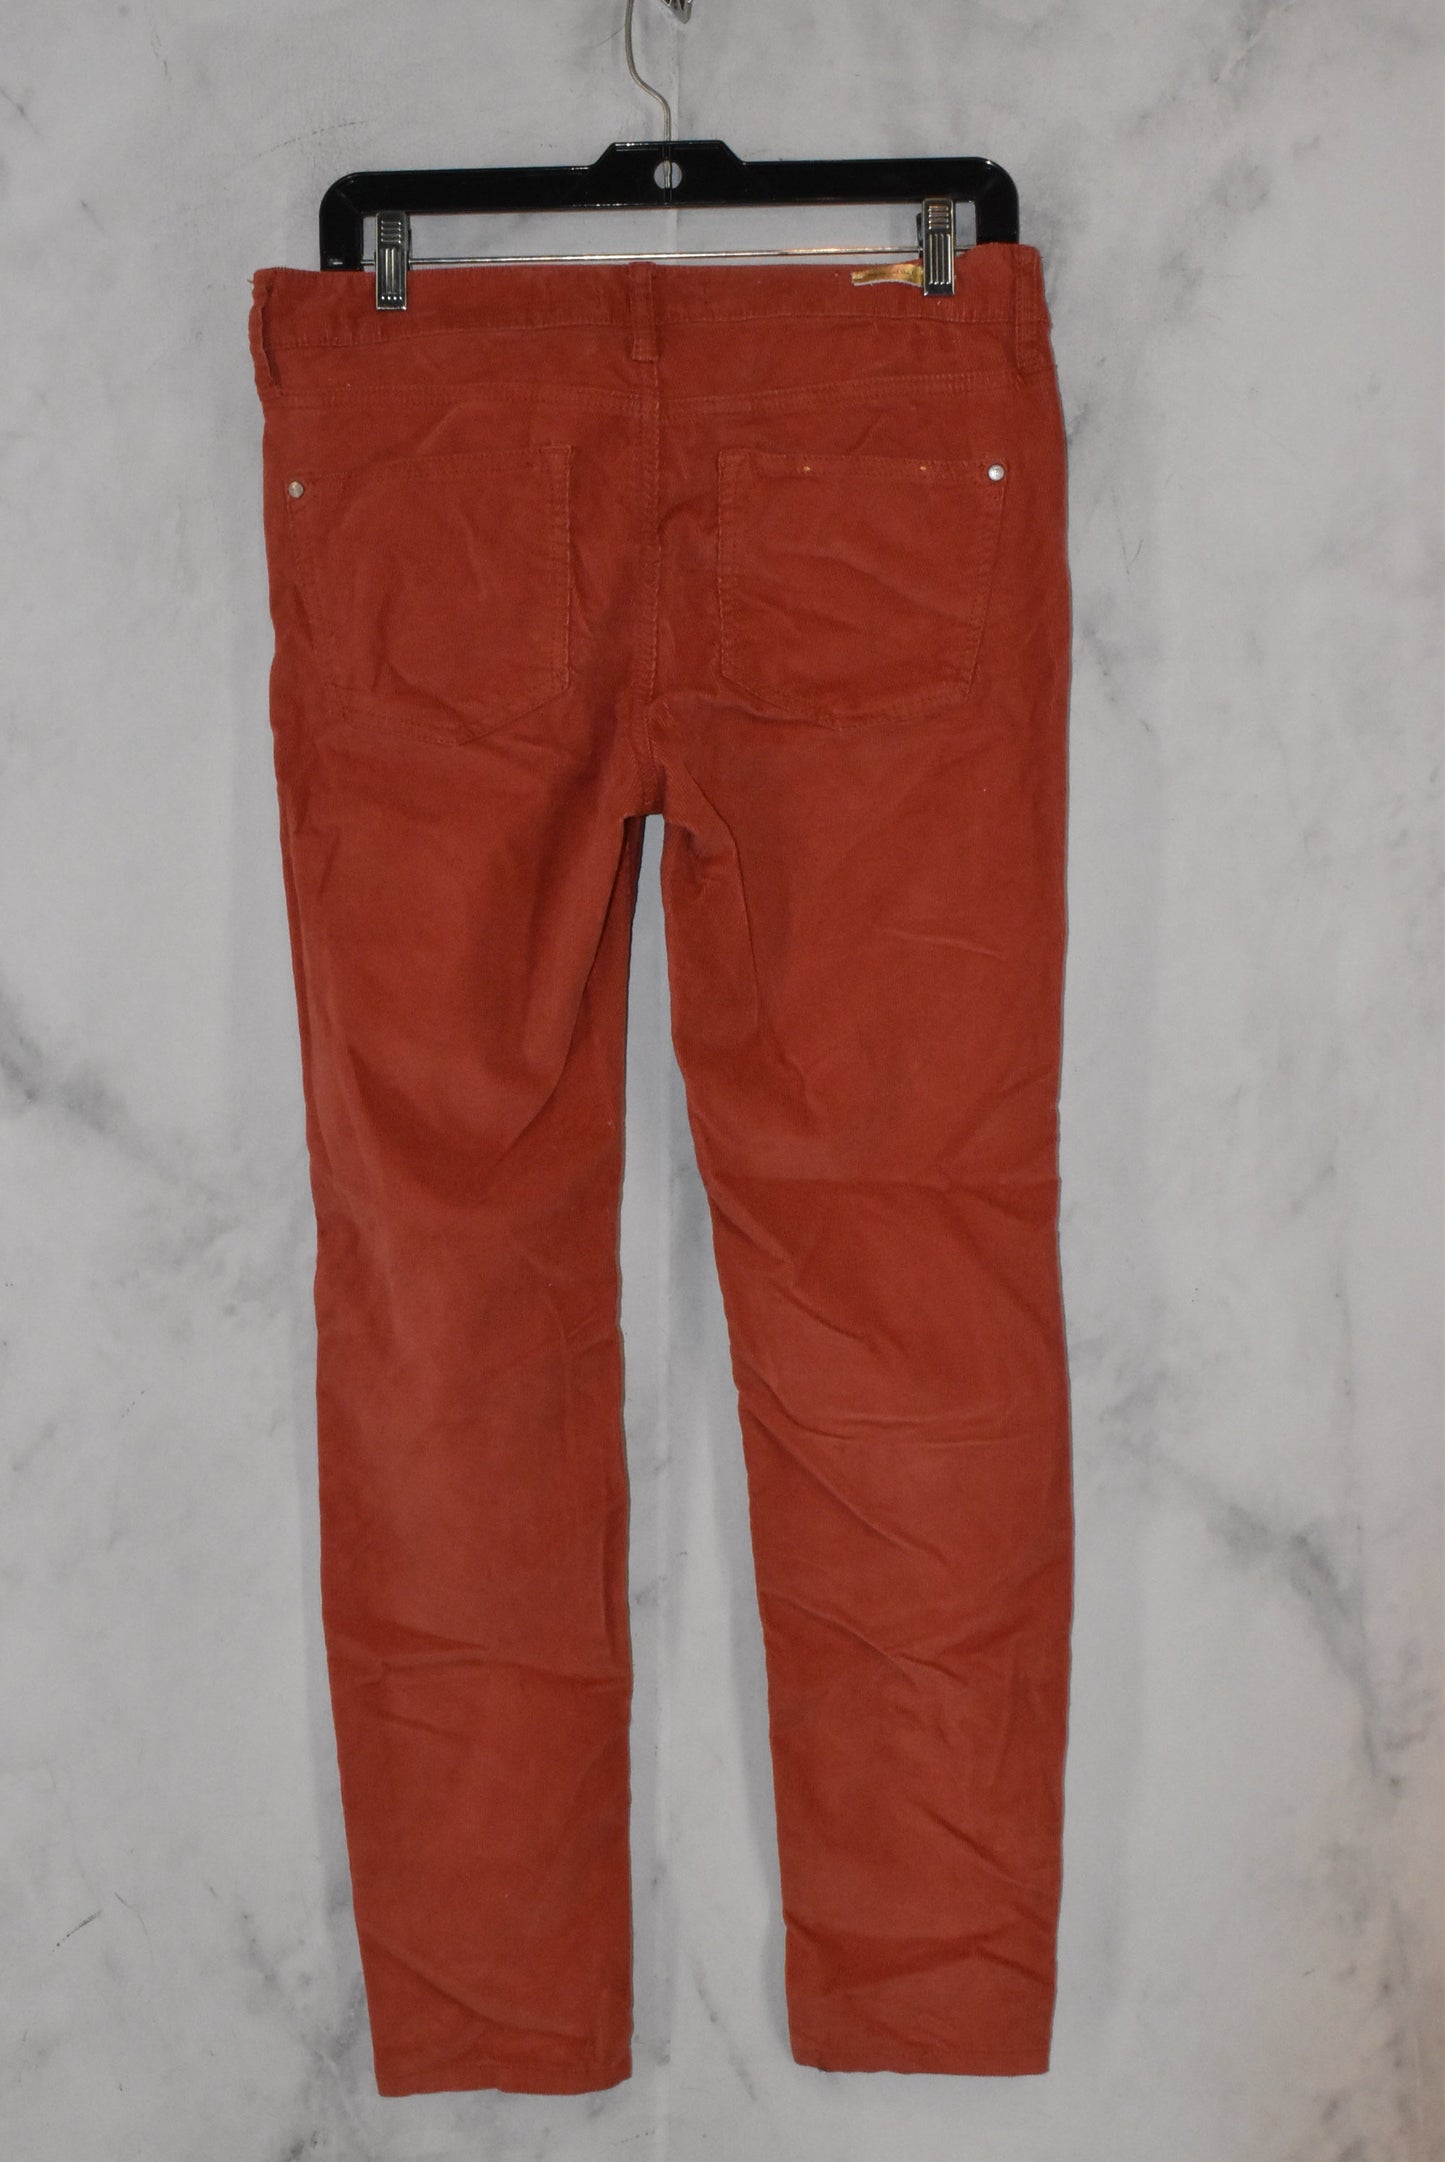 Pants Corduroy By Pilcro  Size: 28